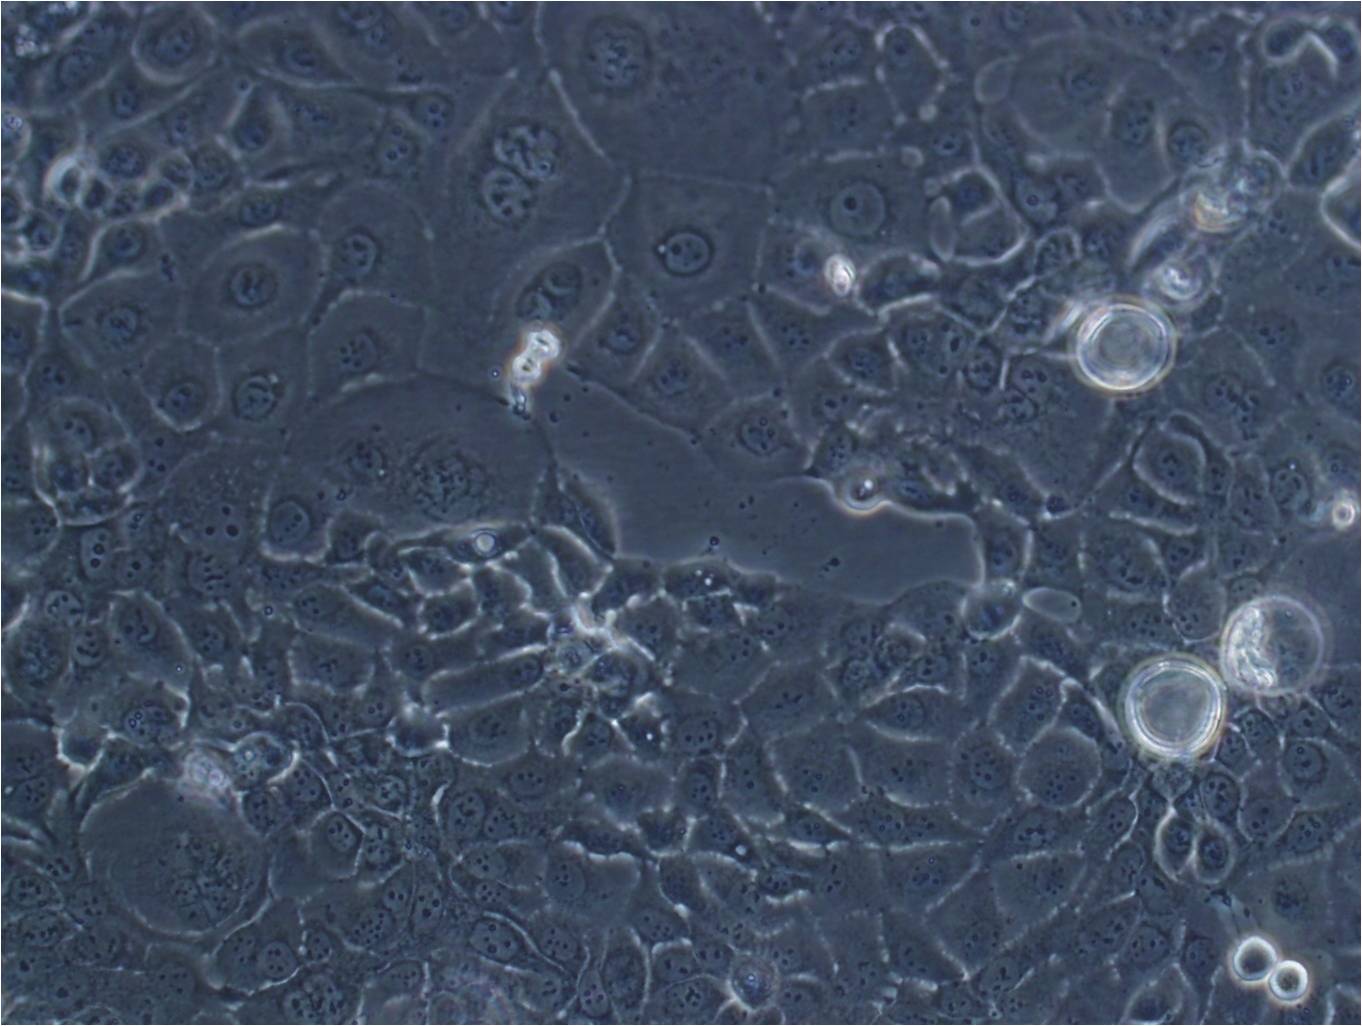 MUG-Chor1 Cells(赠送Str鉴定报告)|人骶骨脊索瘤细胞